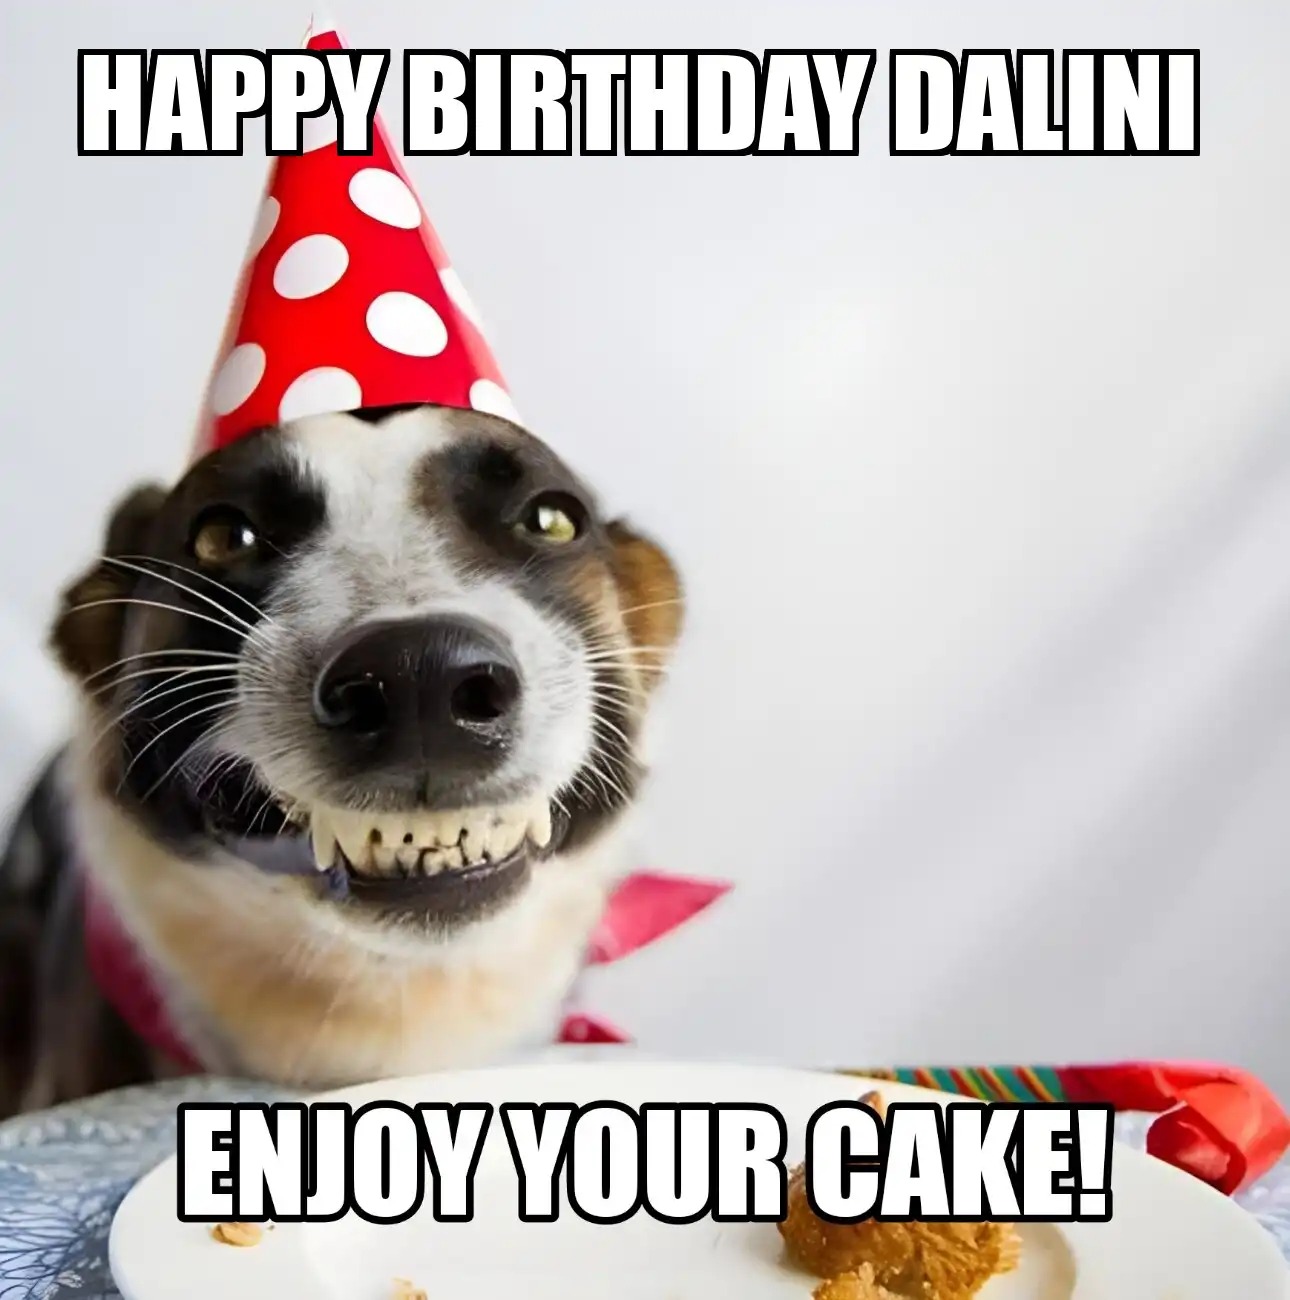 Happy Birthday Dalini Enjoy Your Cake Dog Meme